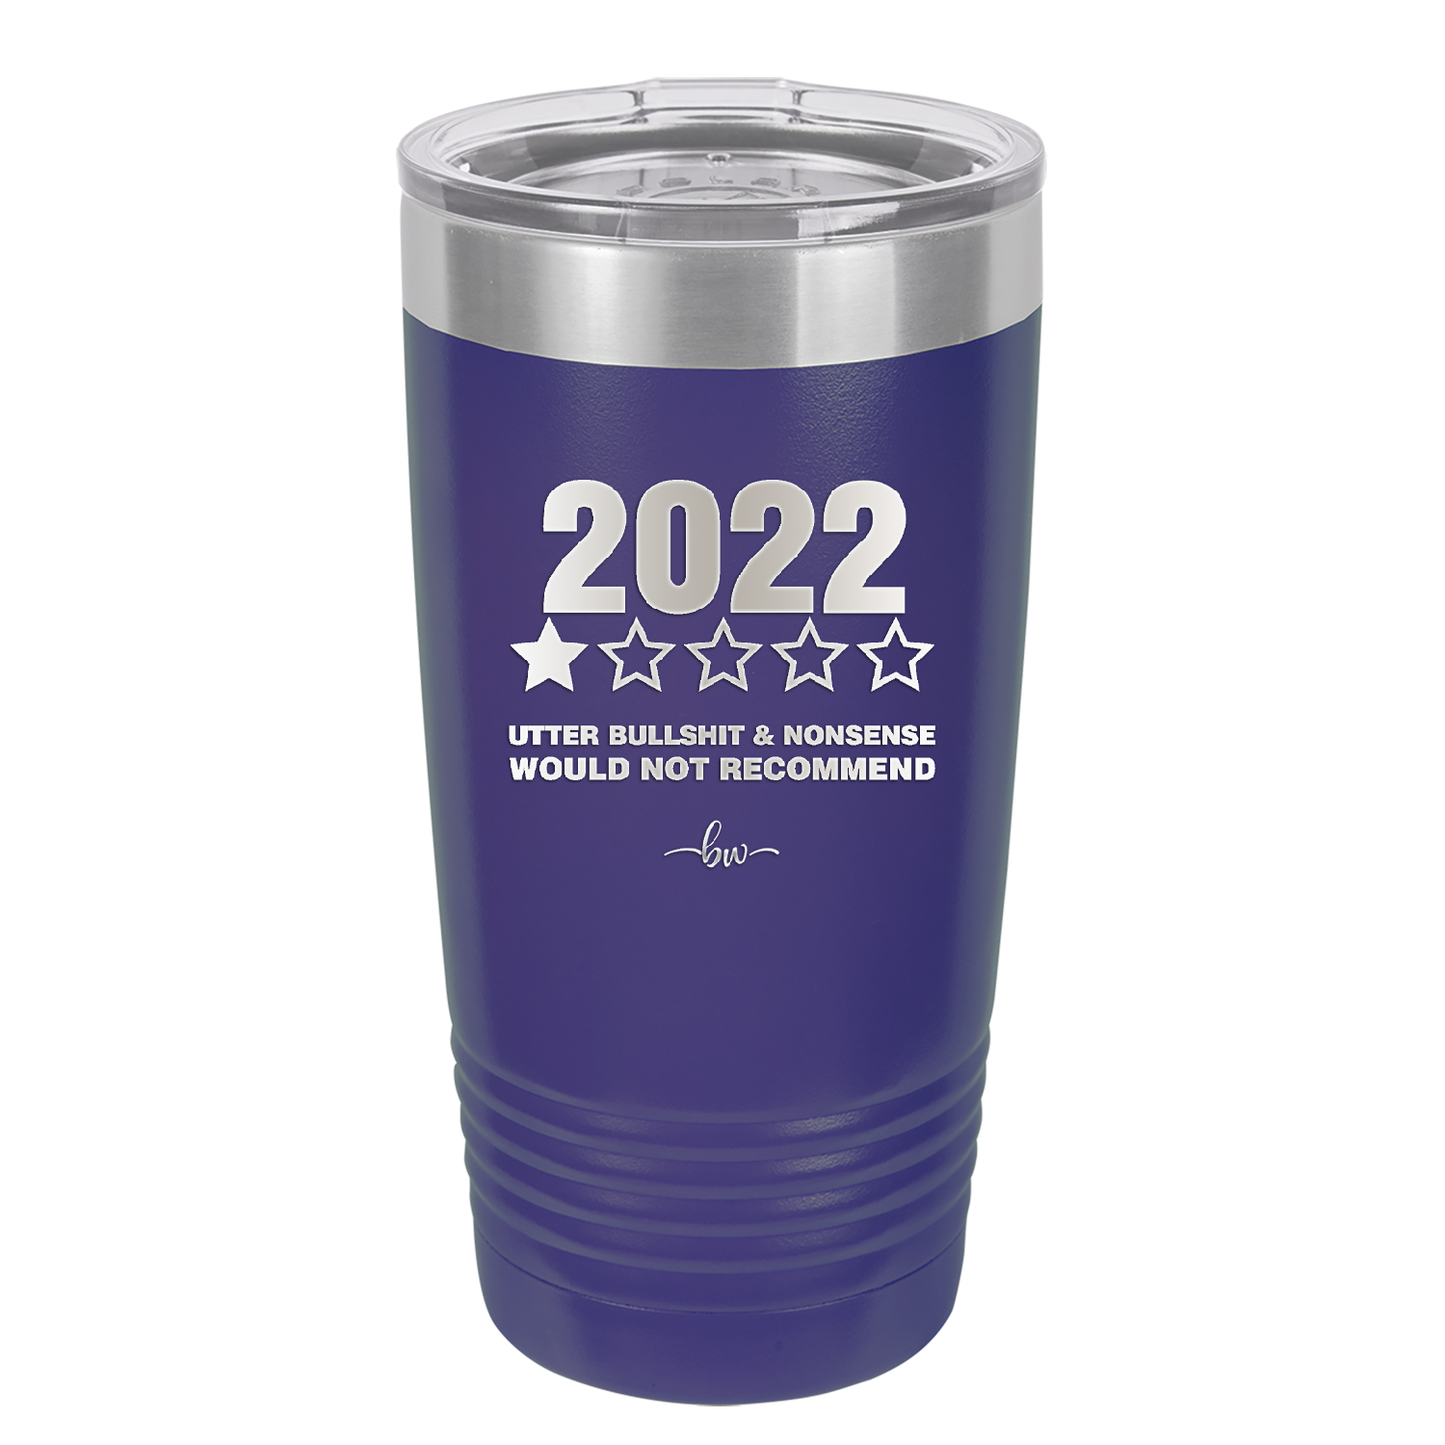 20 oz  2022 utter bullshitt and nonsense would not recommend - purple